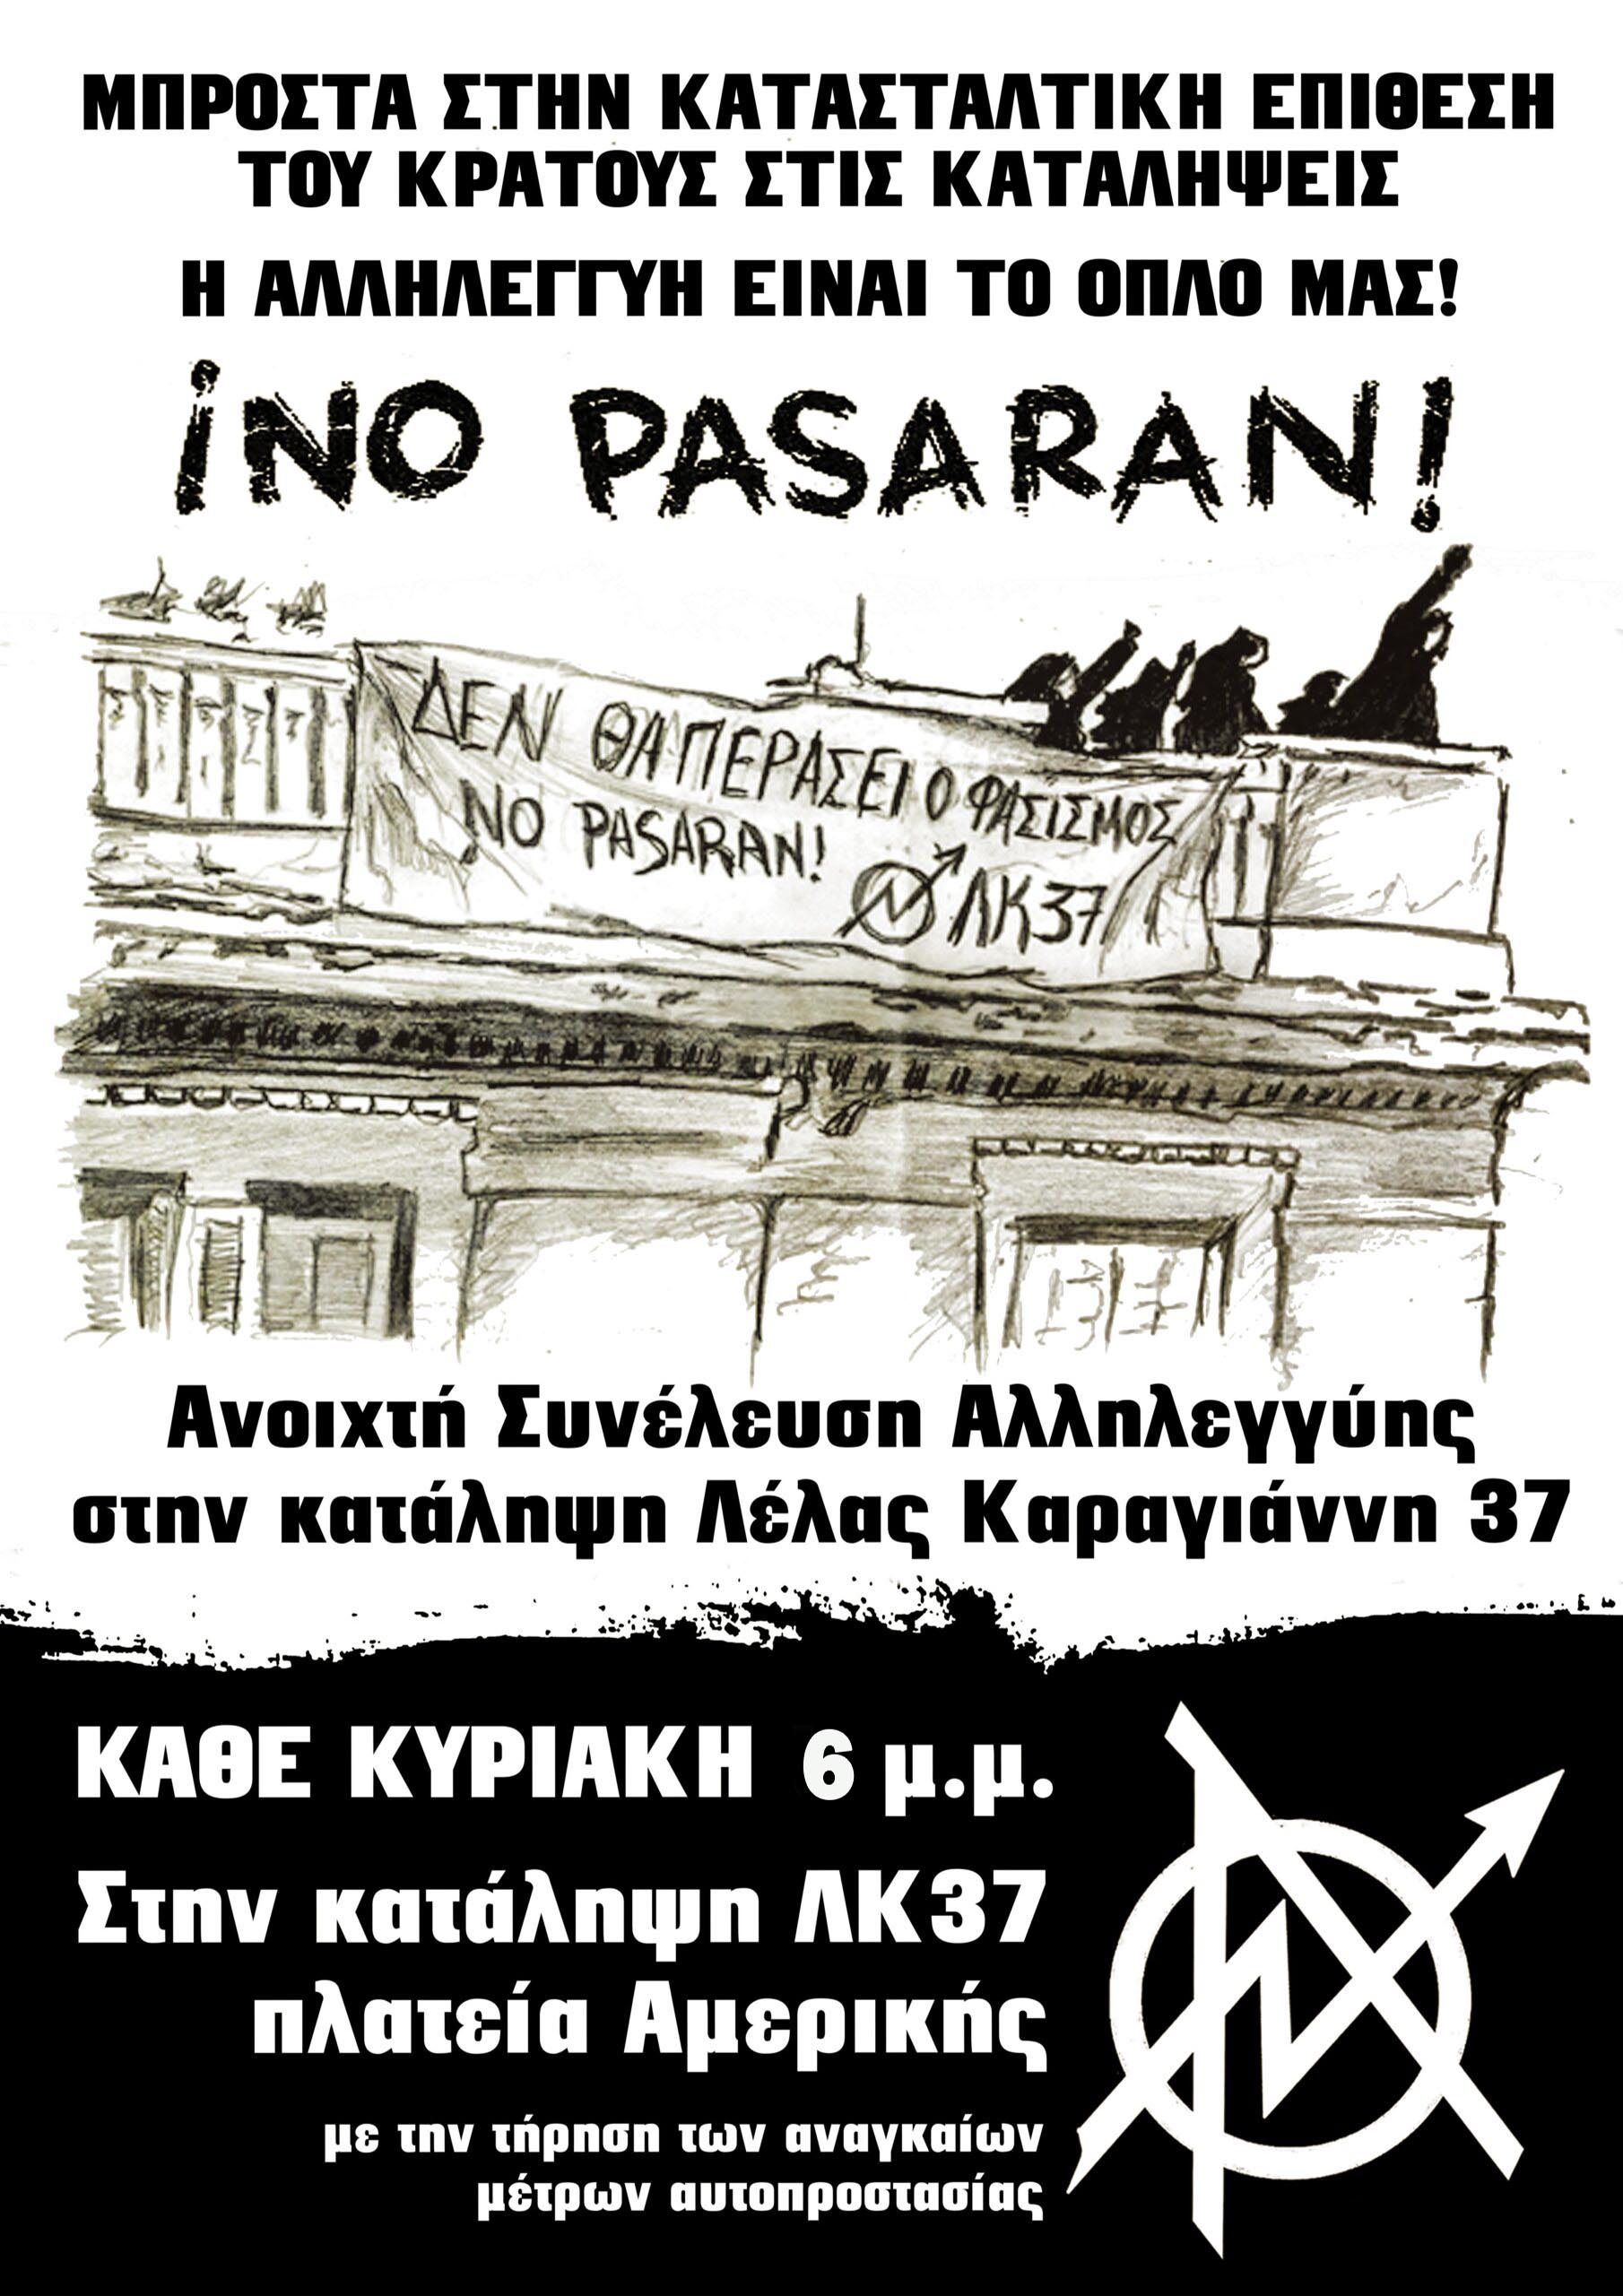 Aνοιχτή Συνέλευση Αλληλεγγύης στην Κατάληψη Λέλας Καραγιάννη 37, κάθε Κυριακή 6μ.μ. στην κατάληψη ΛΚ37